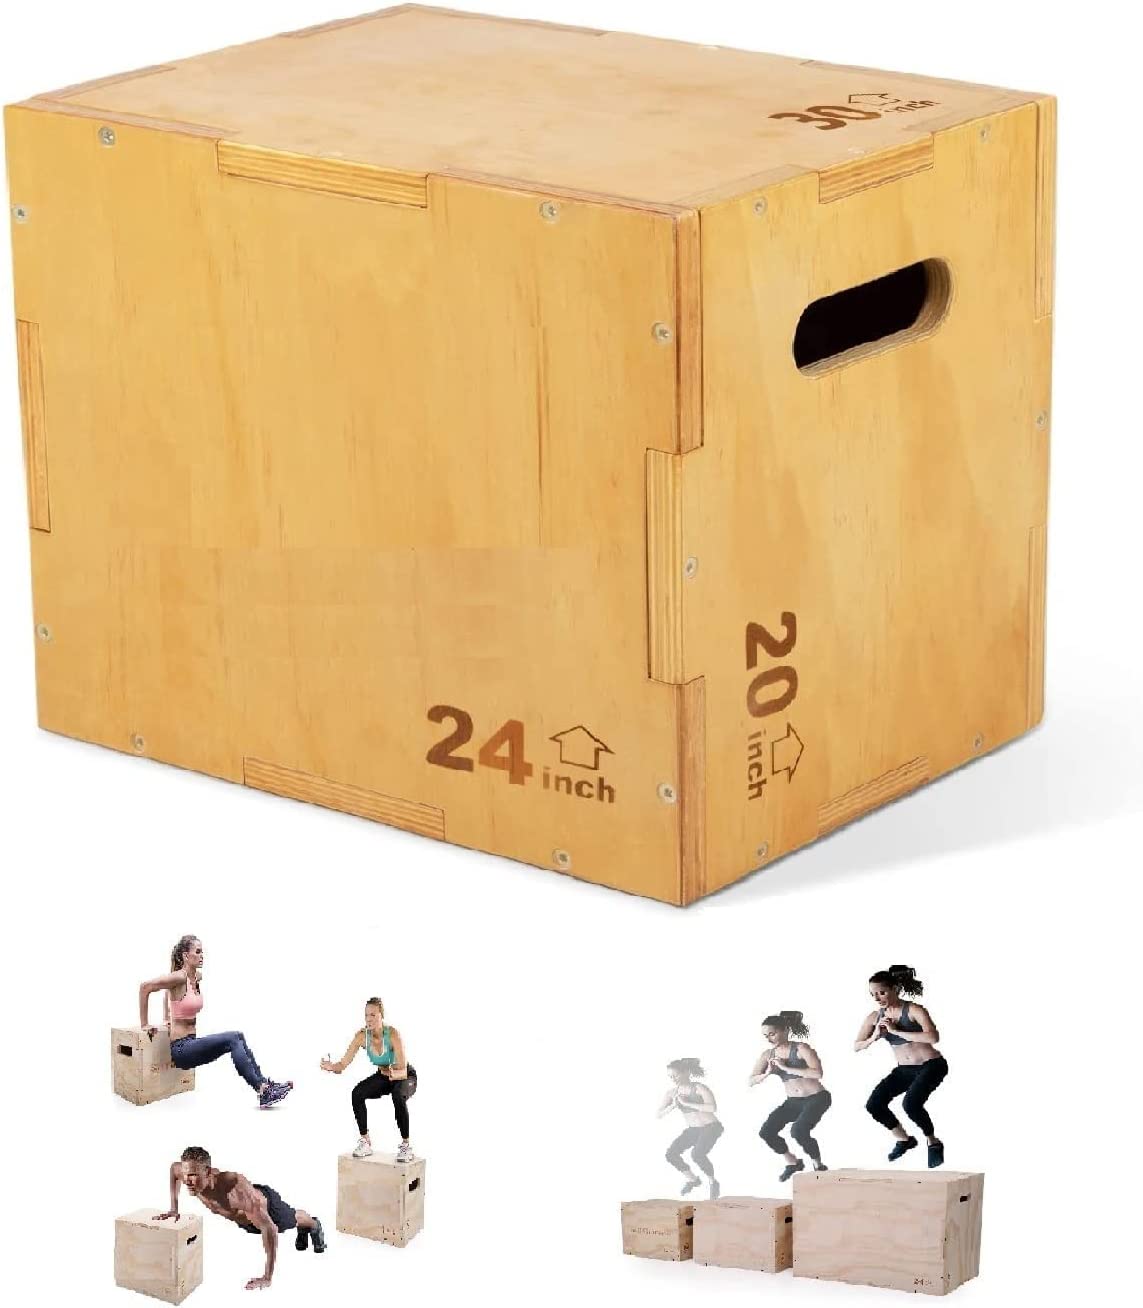 Wooden Plyo Box Exercise Plyometric Jump Box for Jumping | MF-0357-20x24x30 LARGE